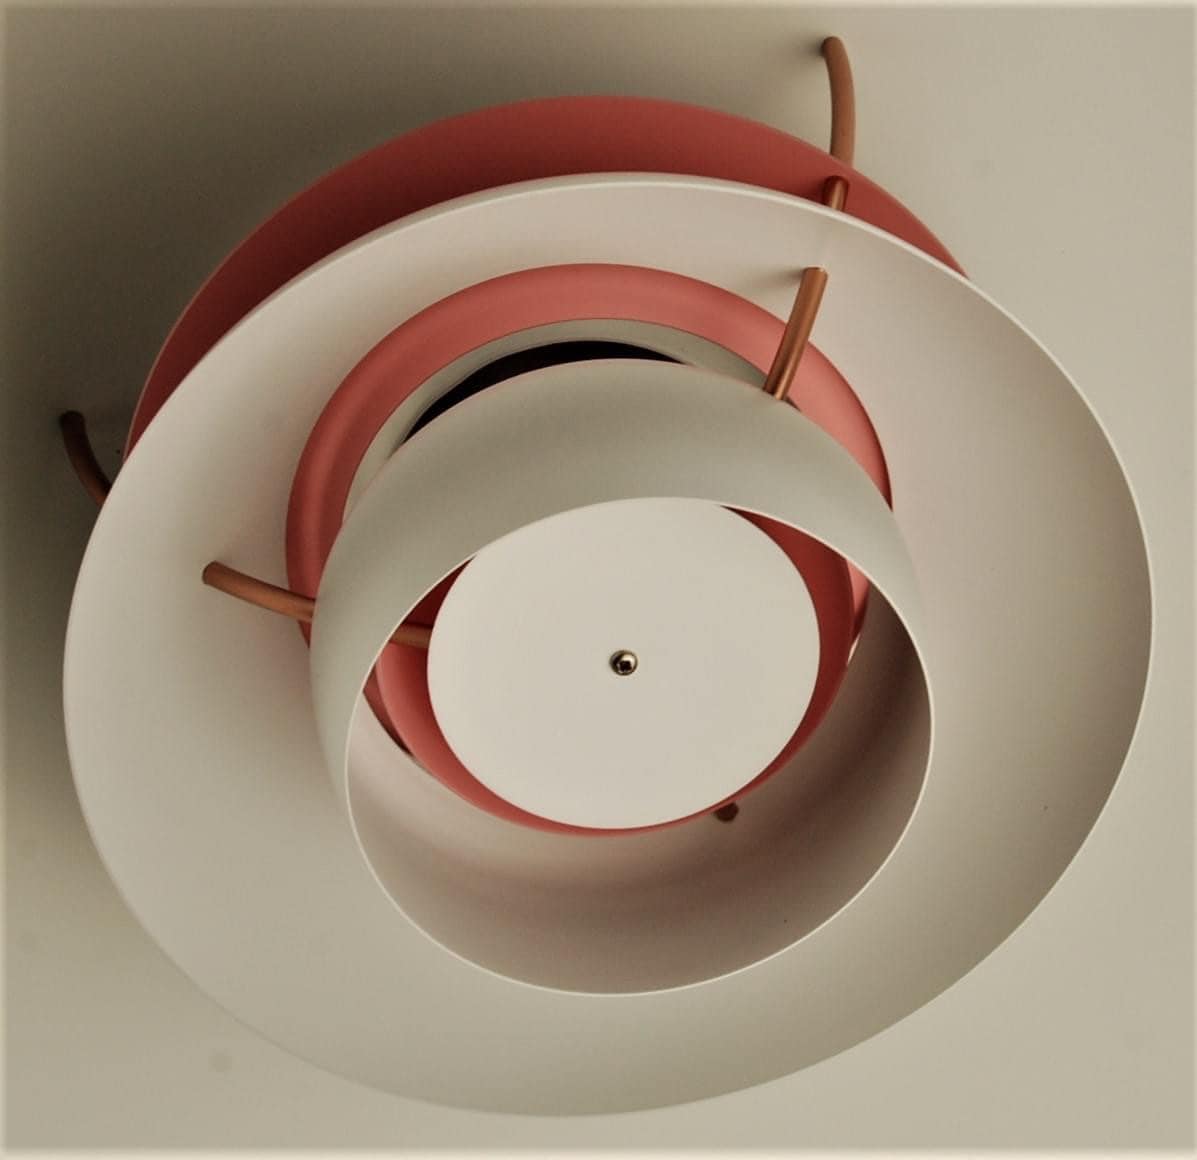 Custom PH5 Louis Poulsen Pendant Light designed by Poul Henningsen | Vintage 1970's refurbished 'White with pink' color